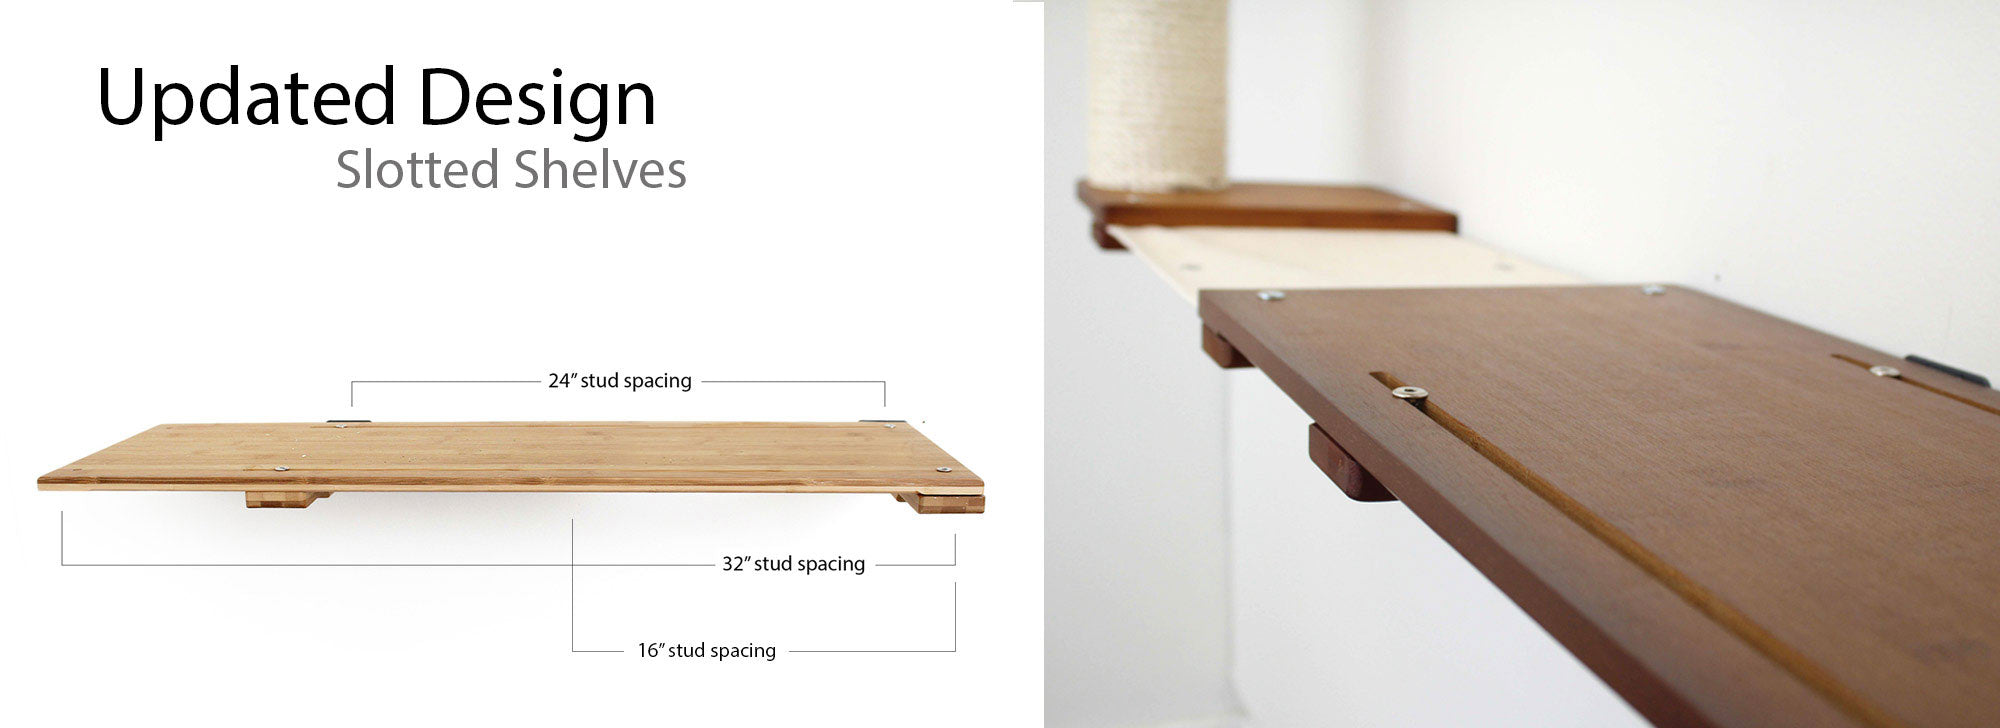 Updated Slotted Shelf Design